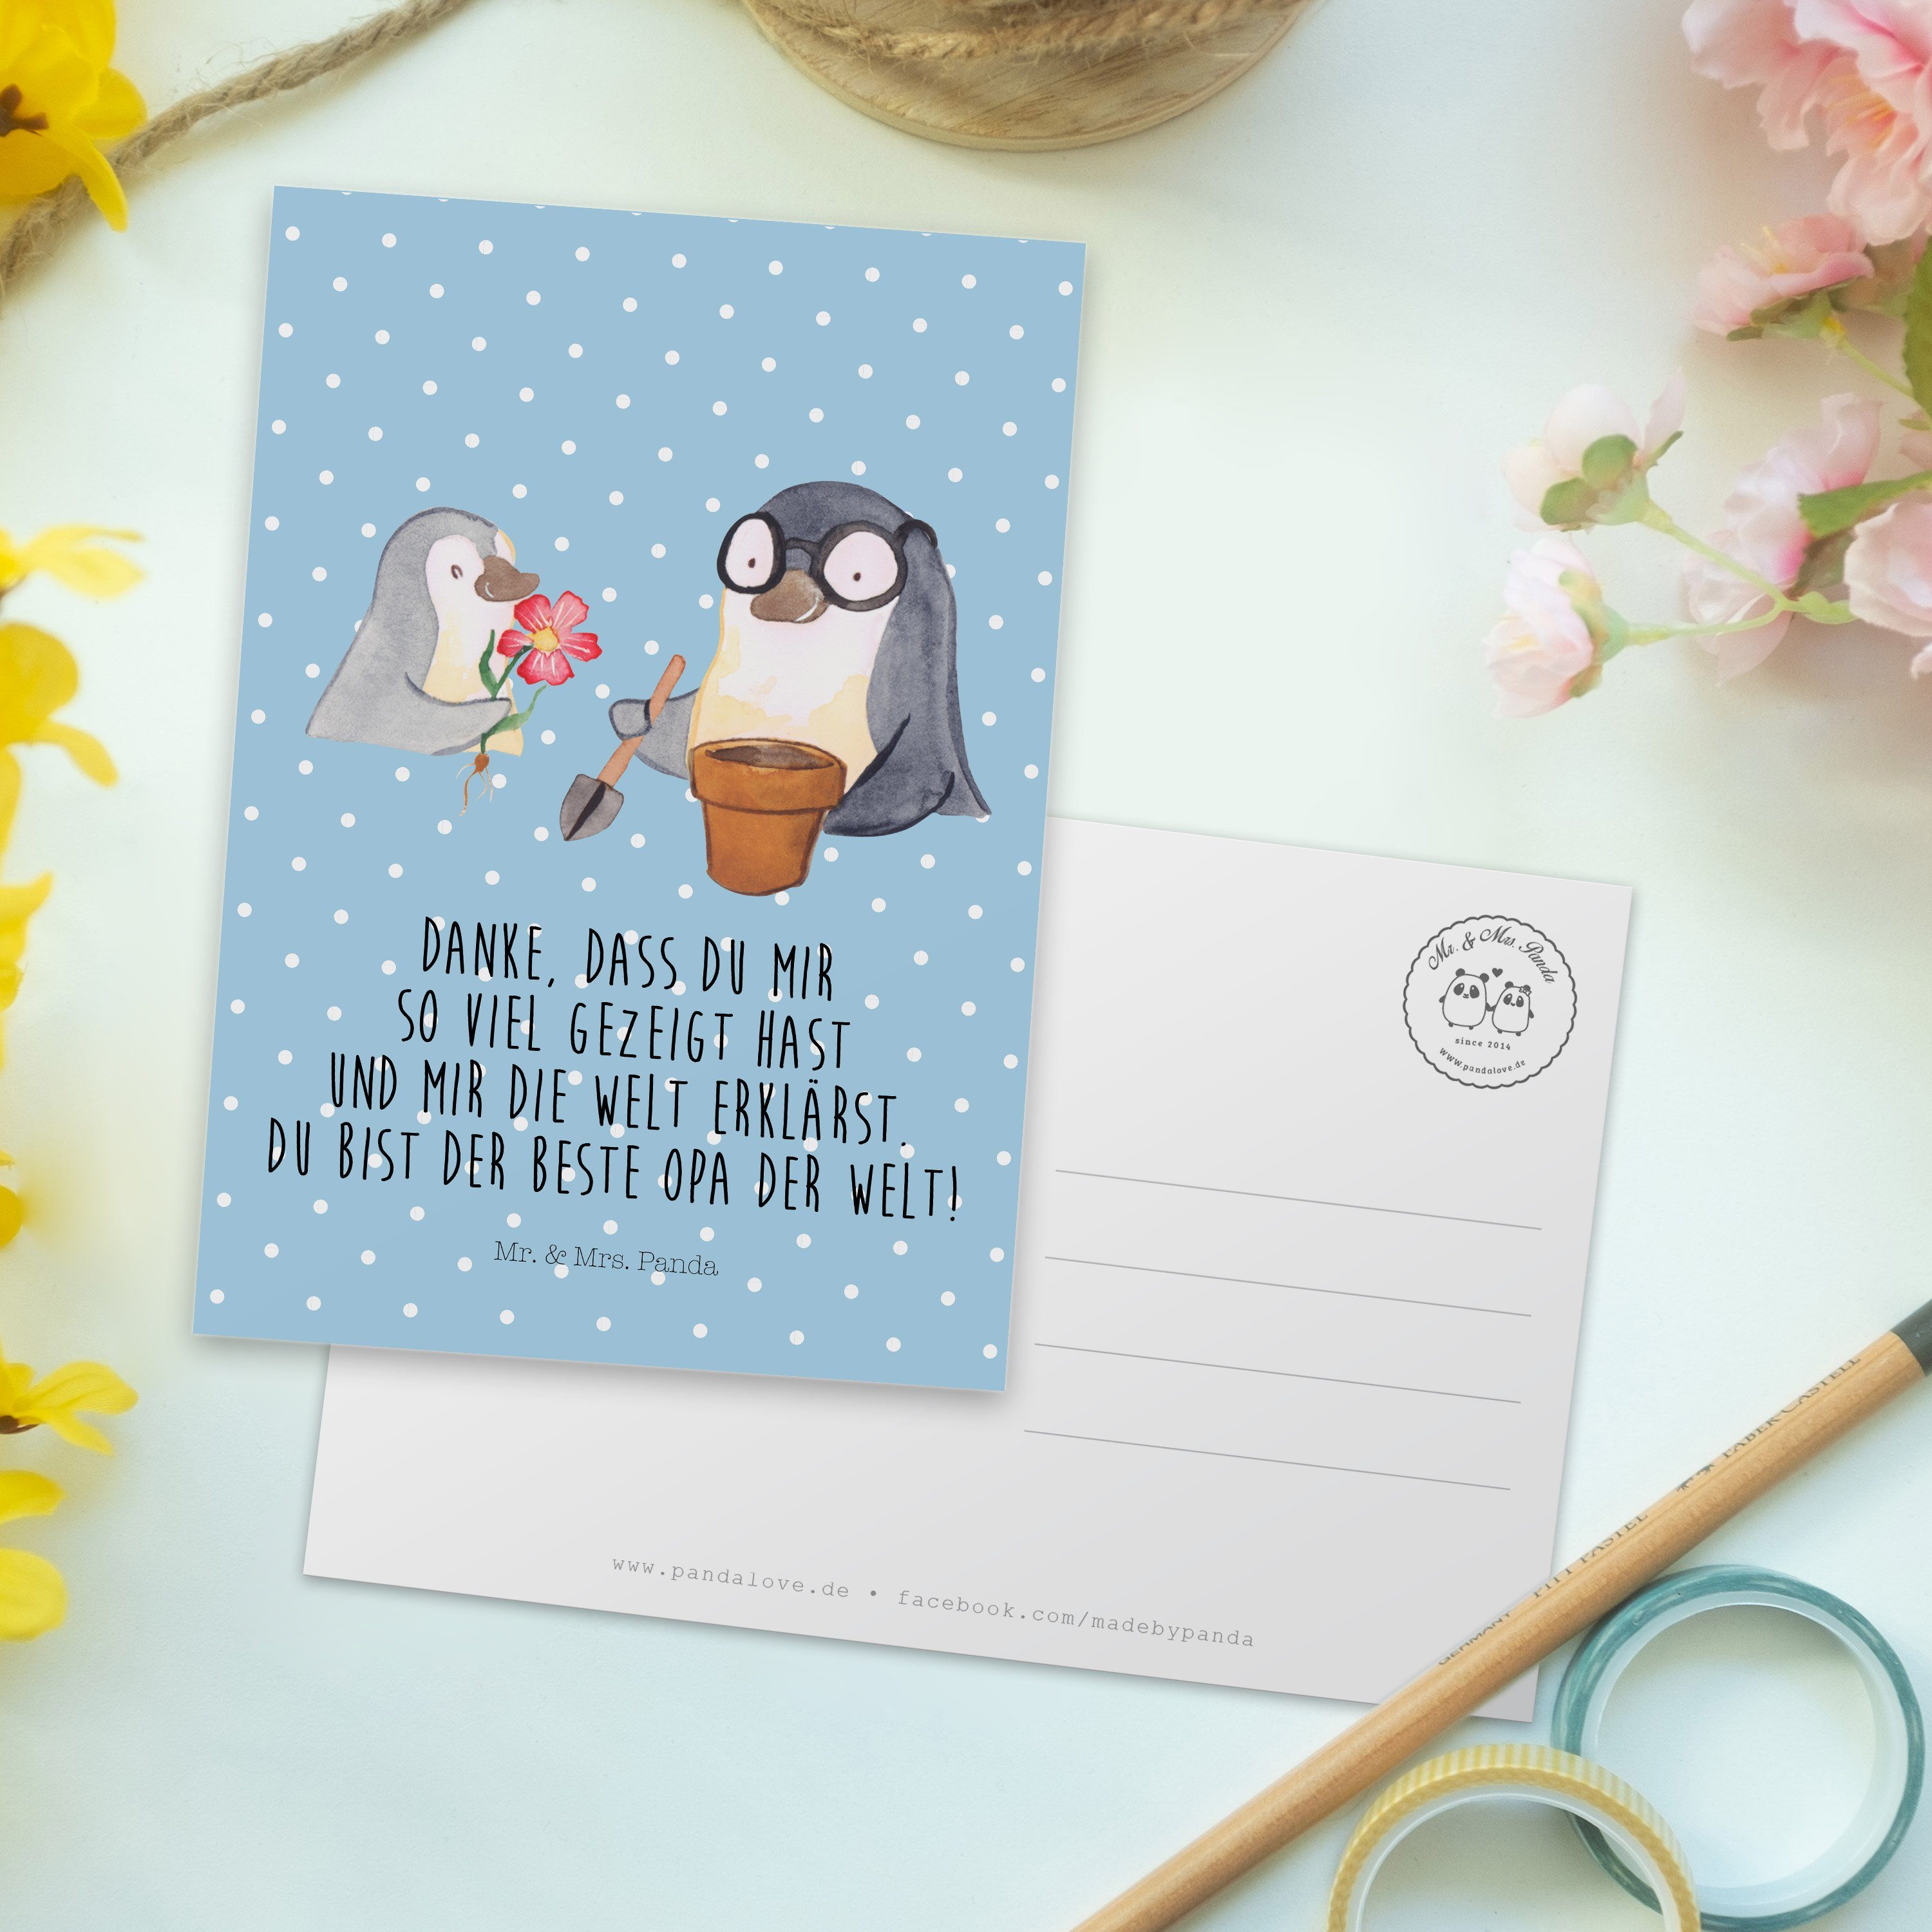 Pastell Panda Blumen Pinguin & Opa, - pflanzen bester Mrs. Mr. Ge Geschenk, Postkarte - Blau Opa